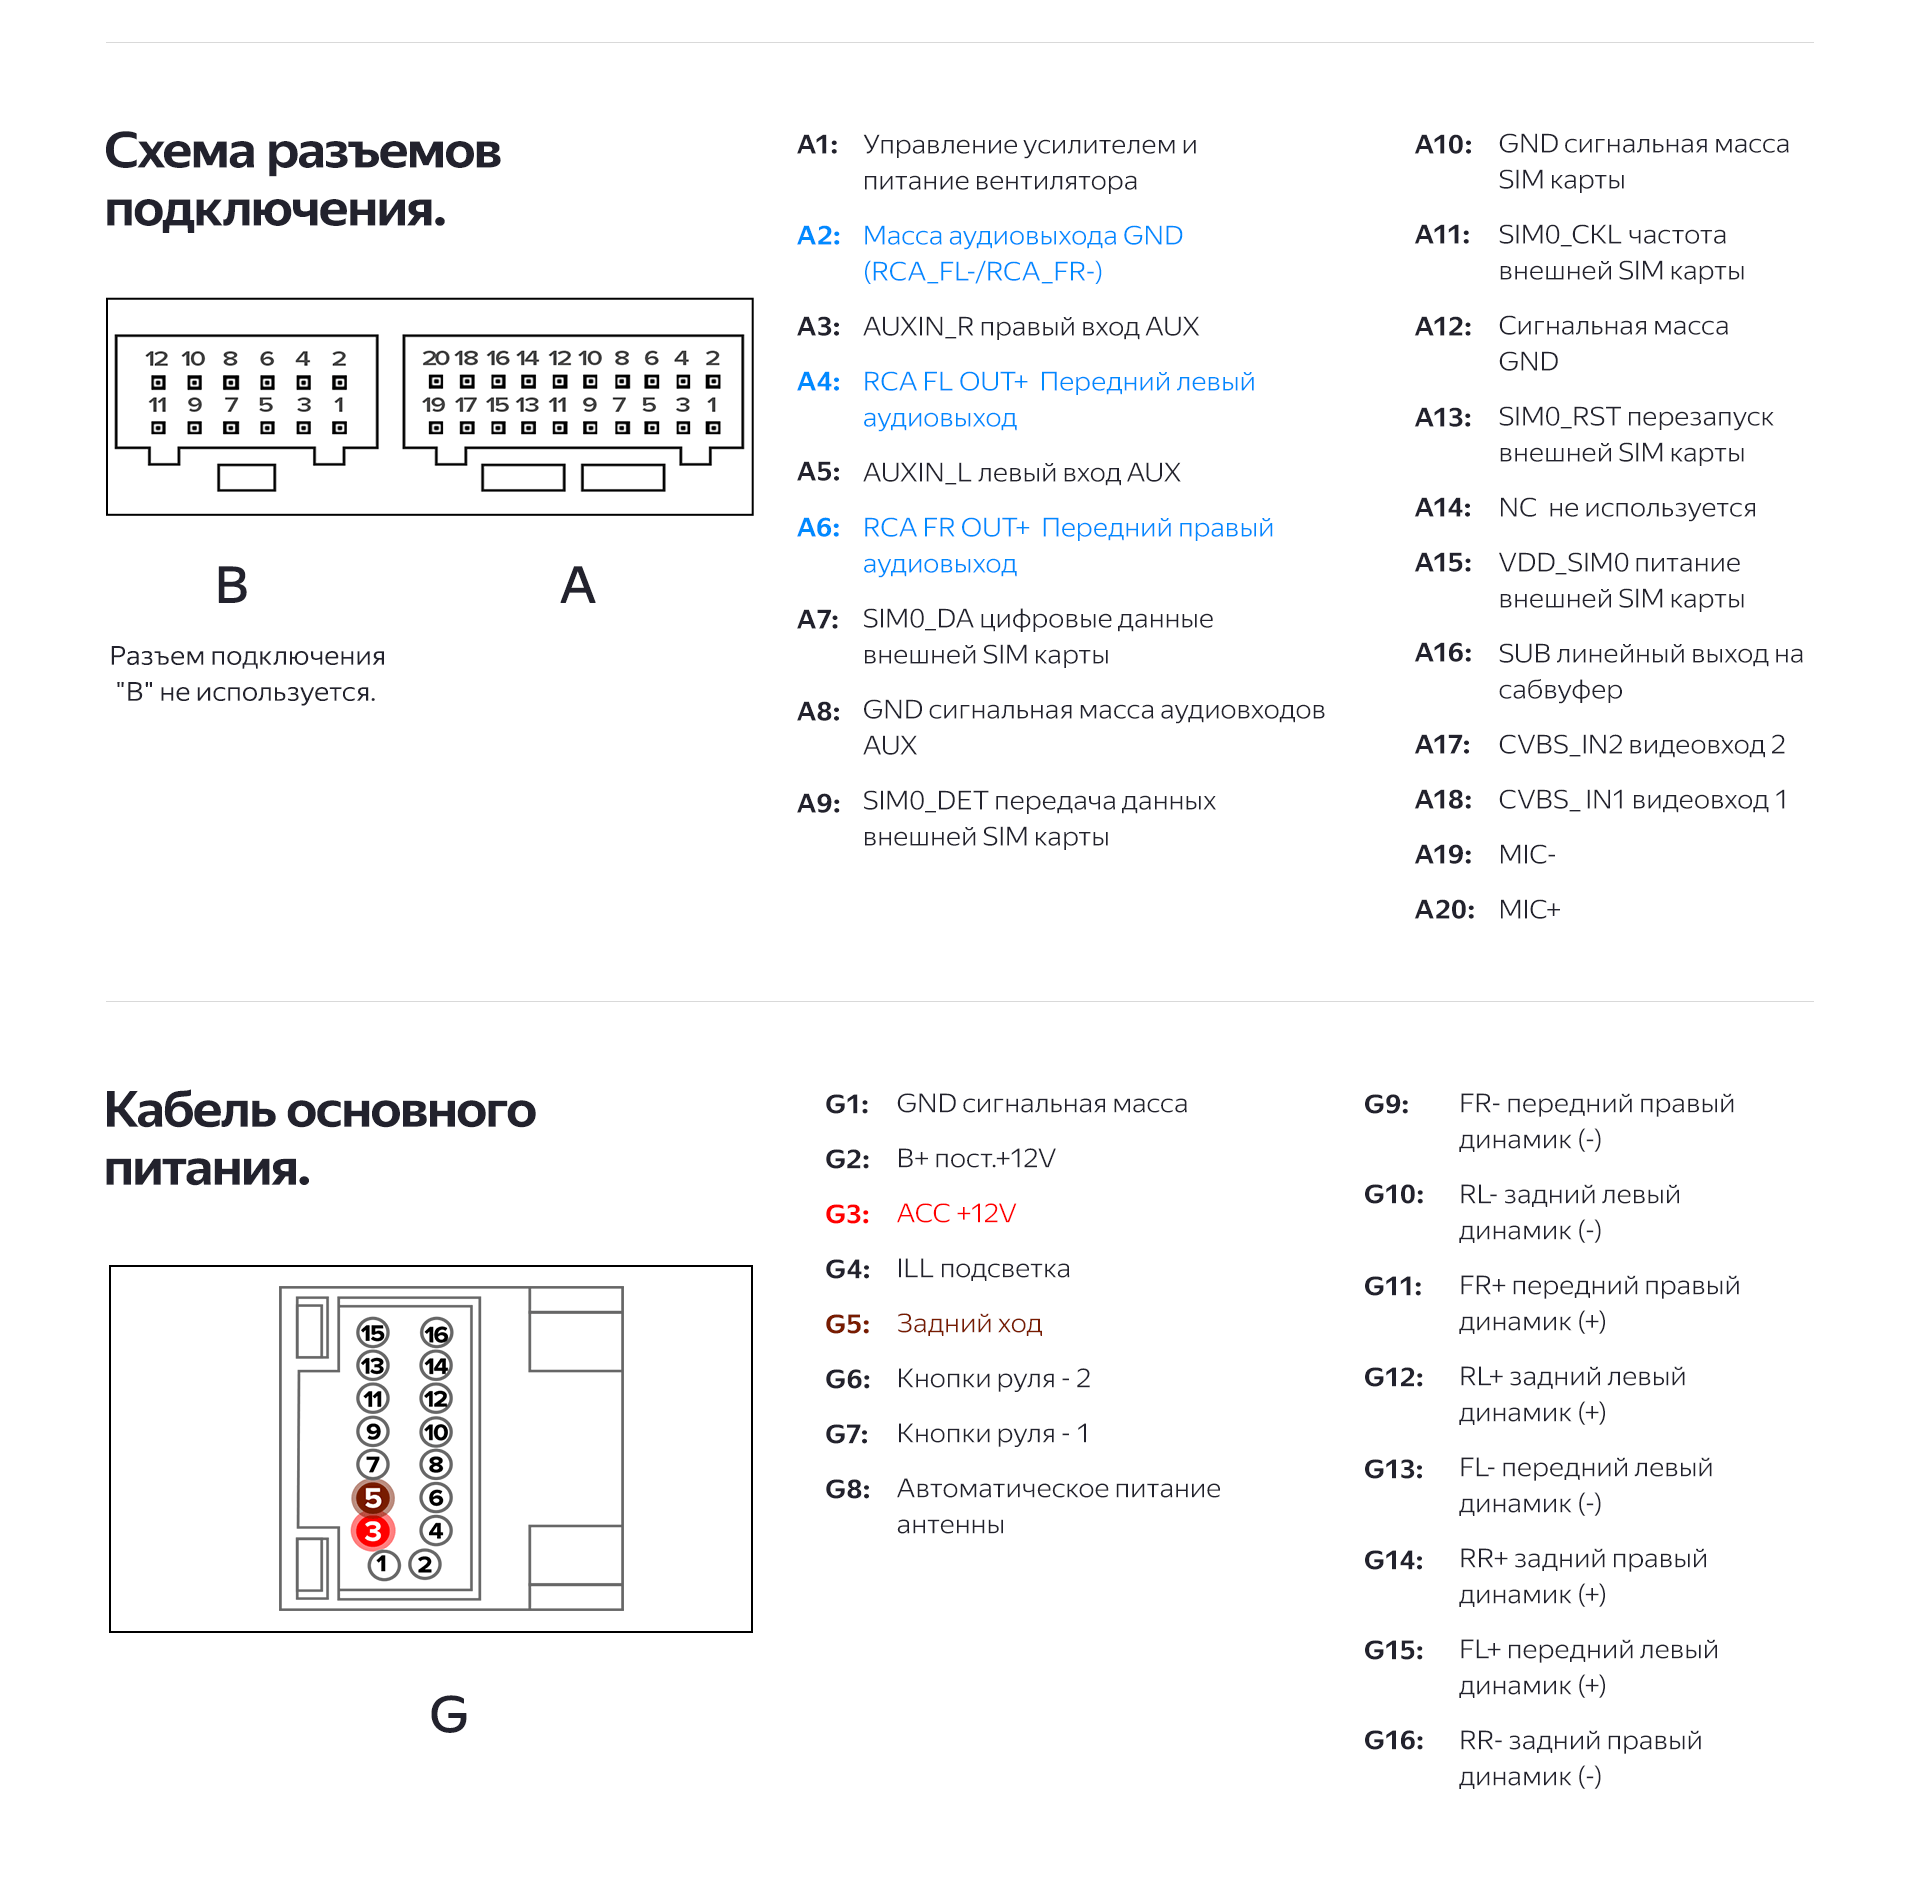 Магнитола teyes cc2 plus инструкция на русском